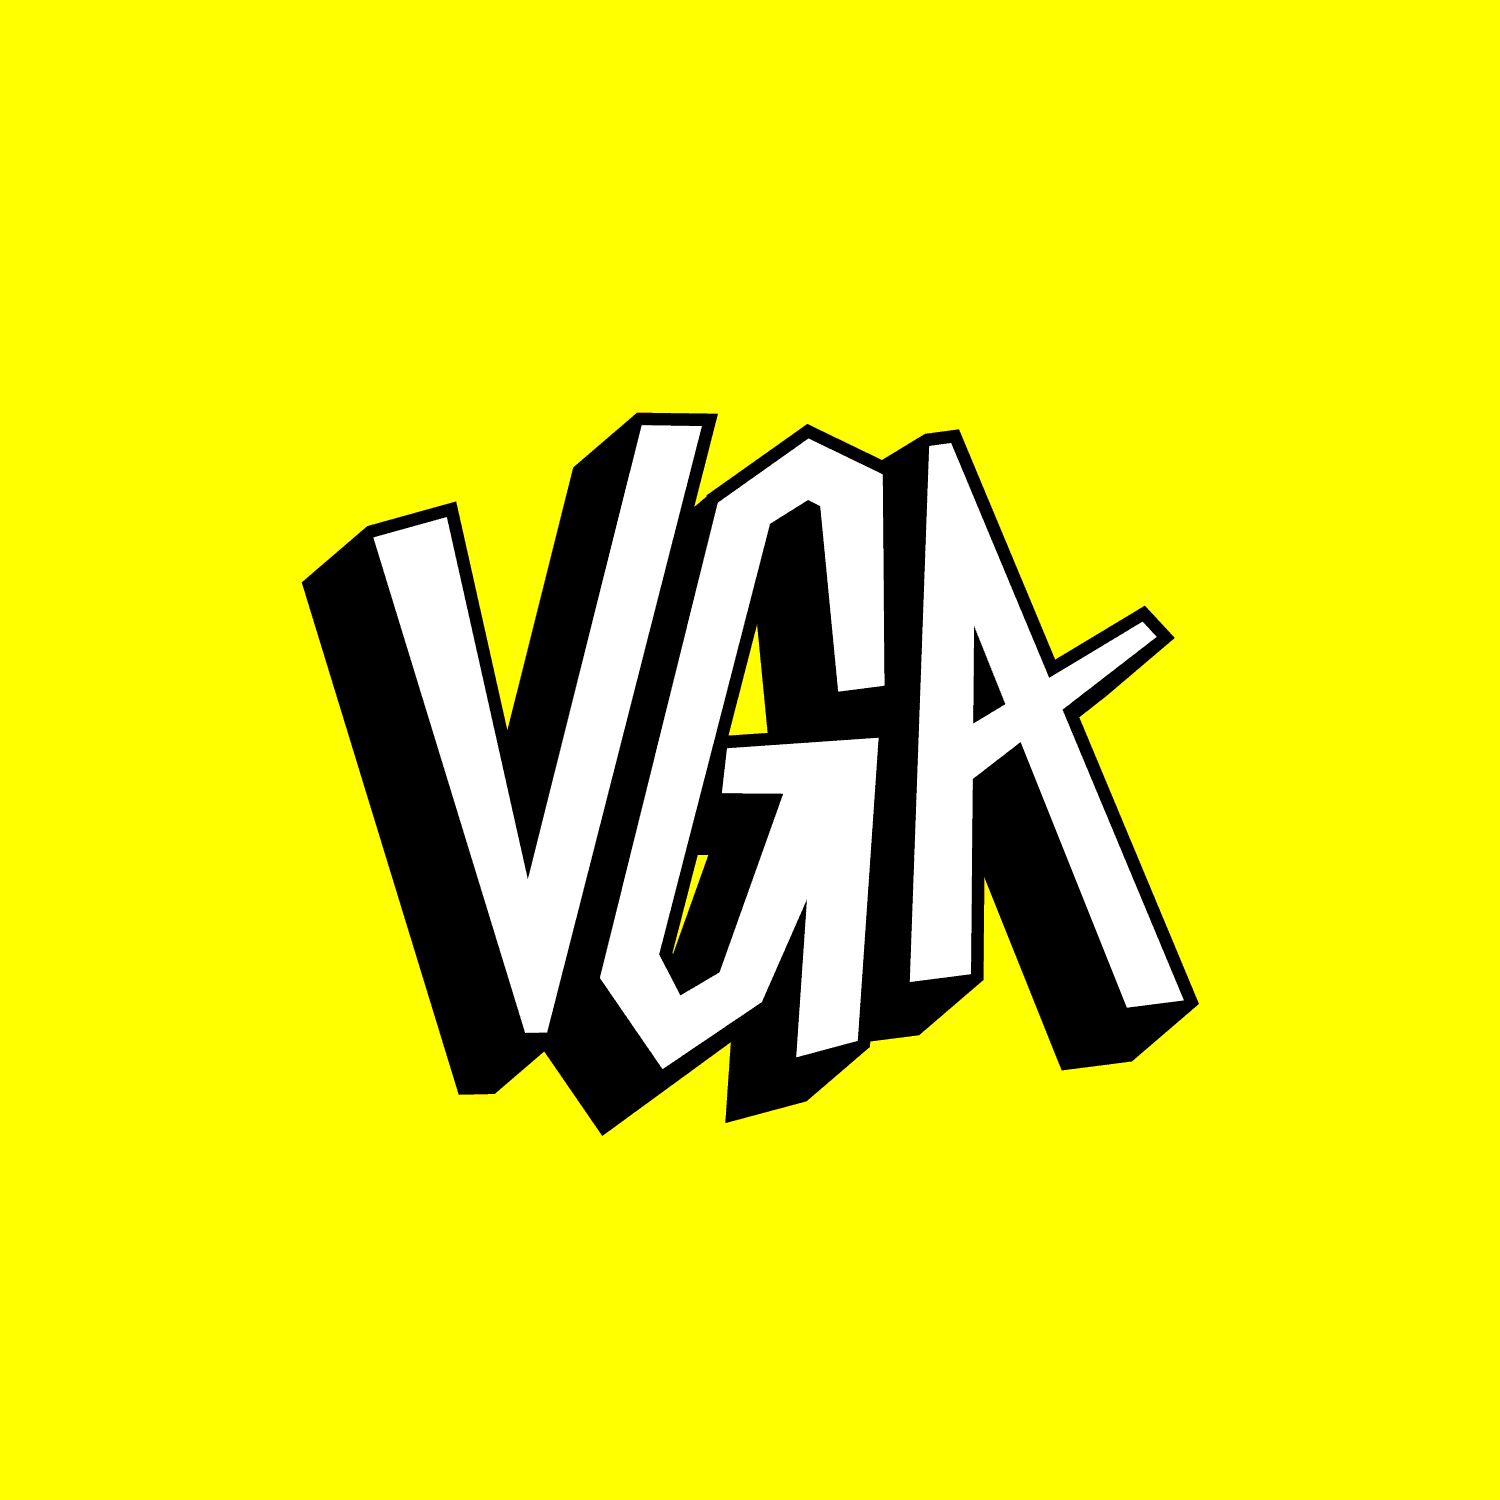 logos-vga-7.png